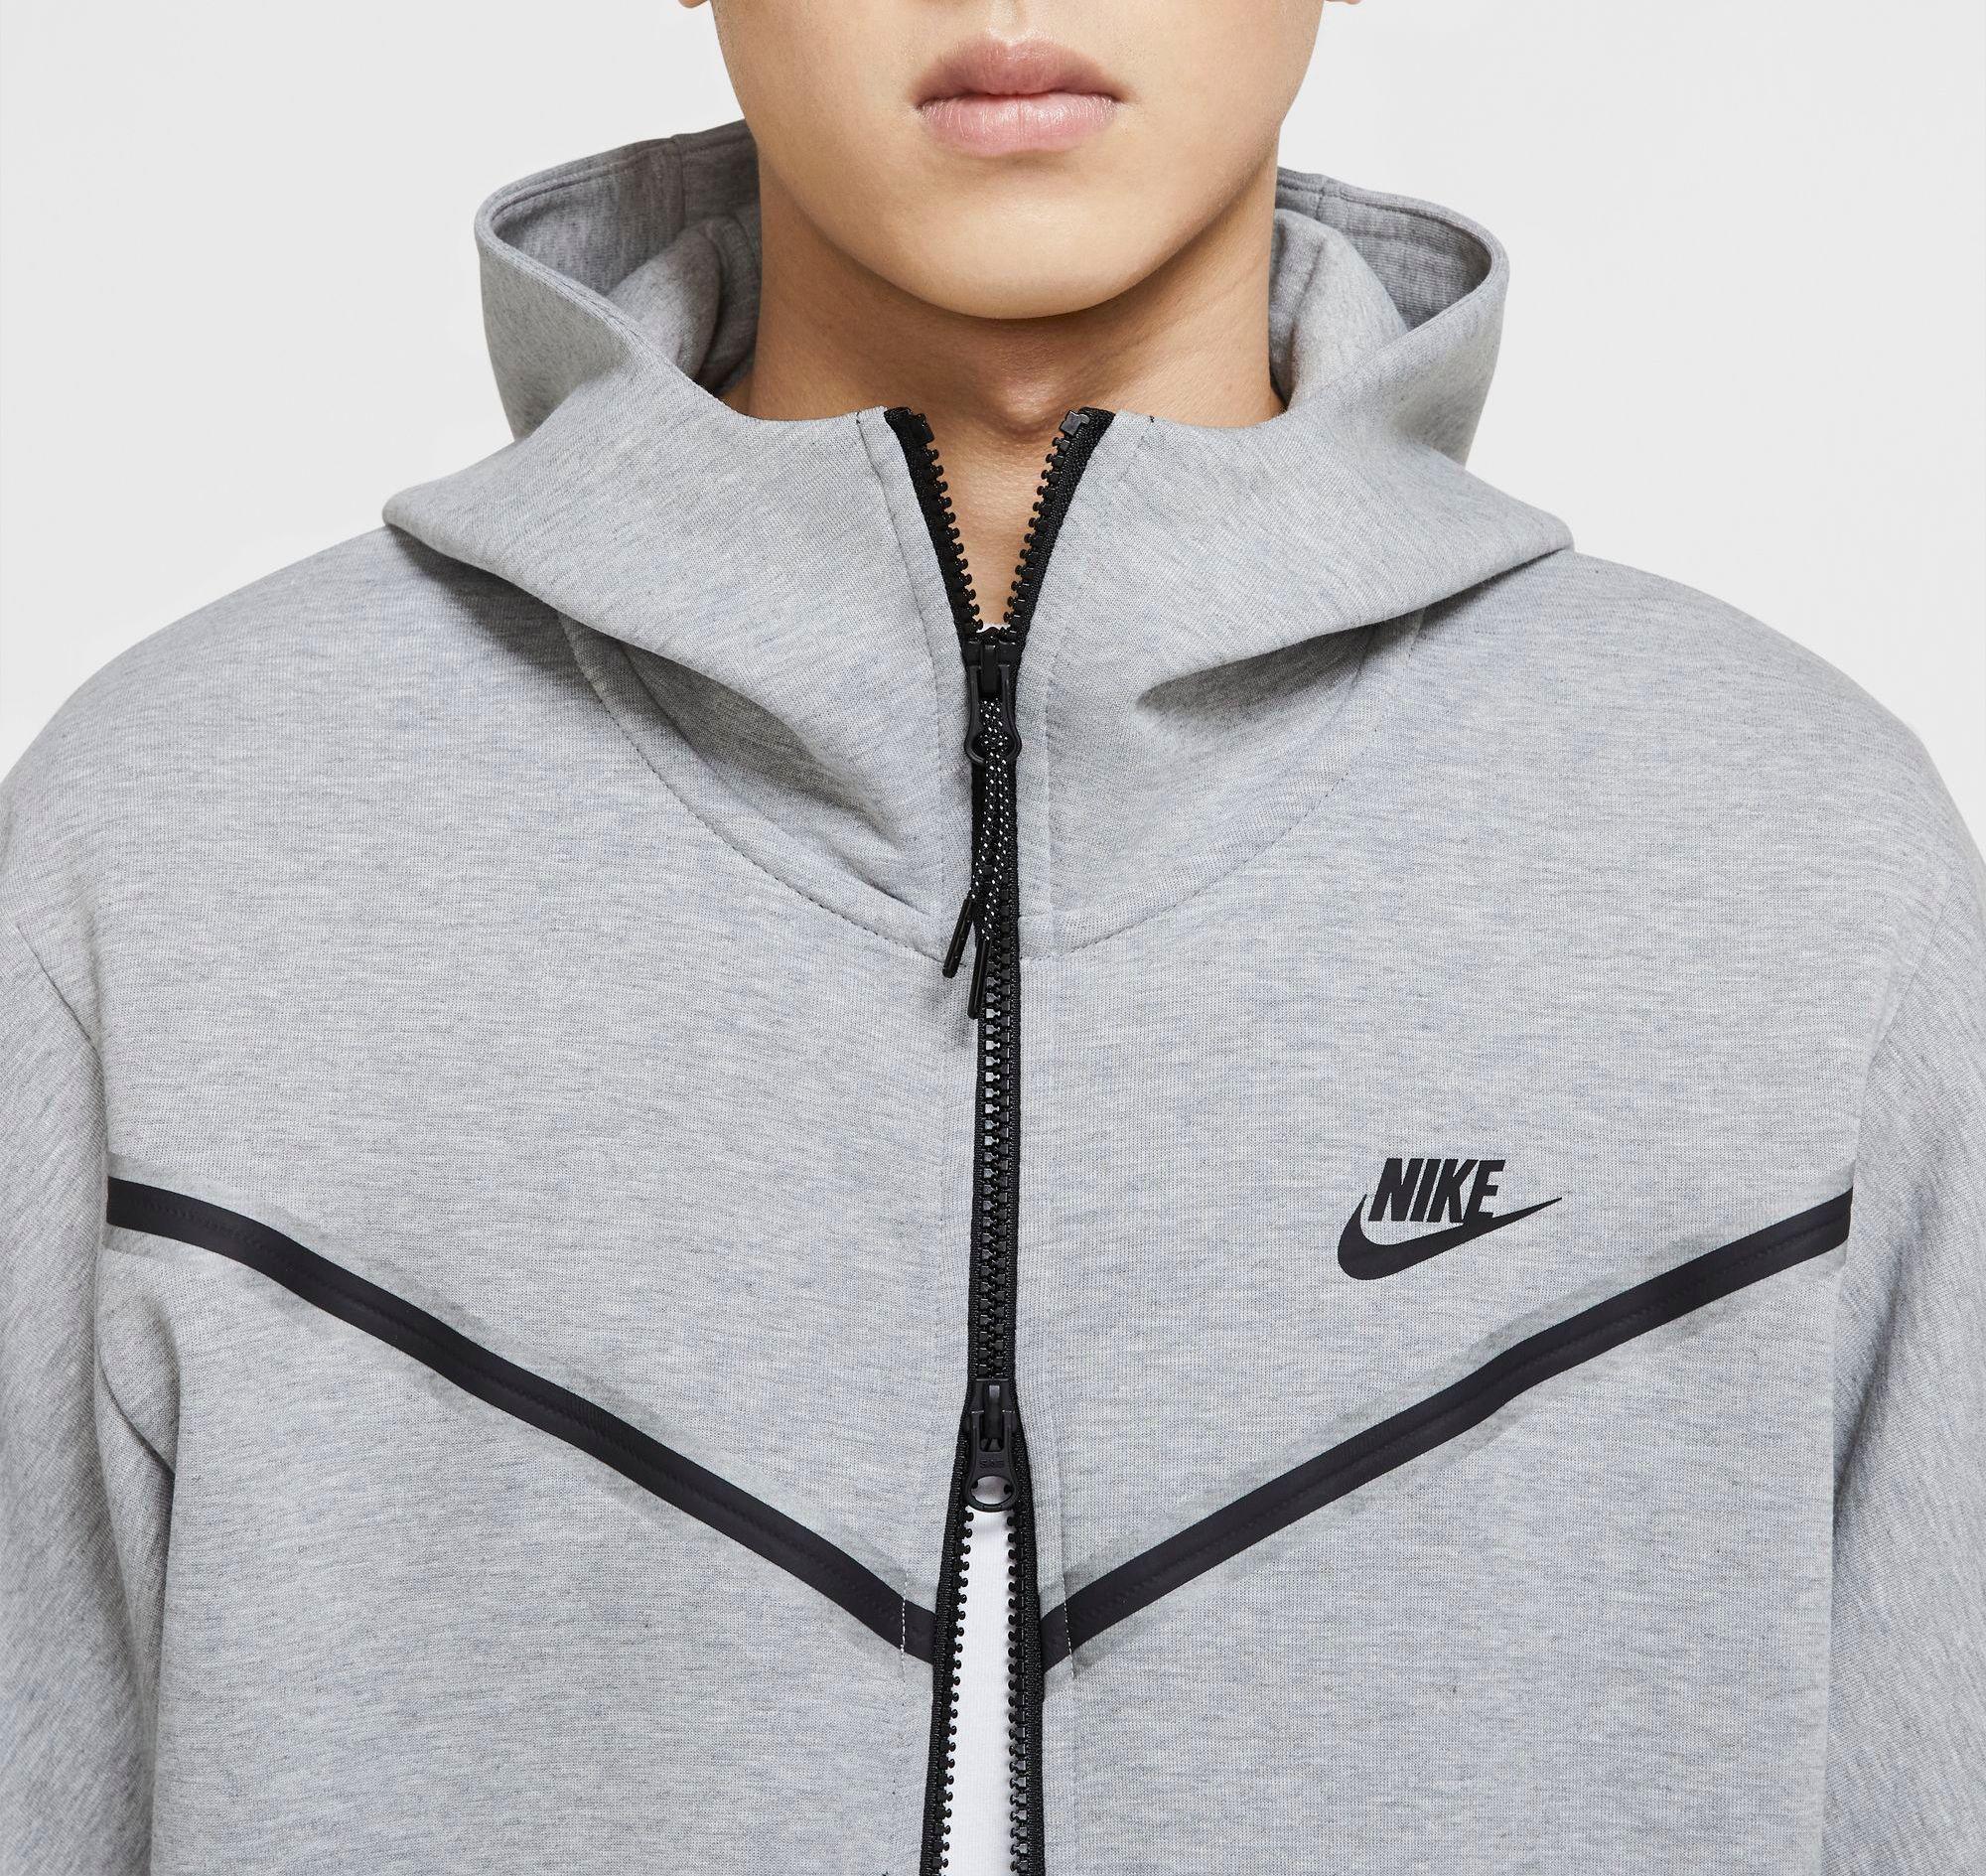 Nike Tech Fleece Full Zip Hoodie in Grey (Gray) for Men - Save 49% | Lyst